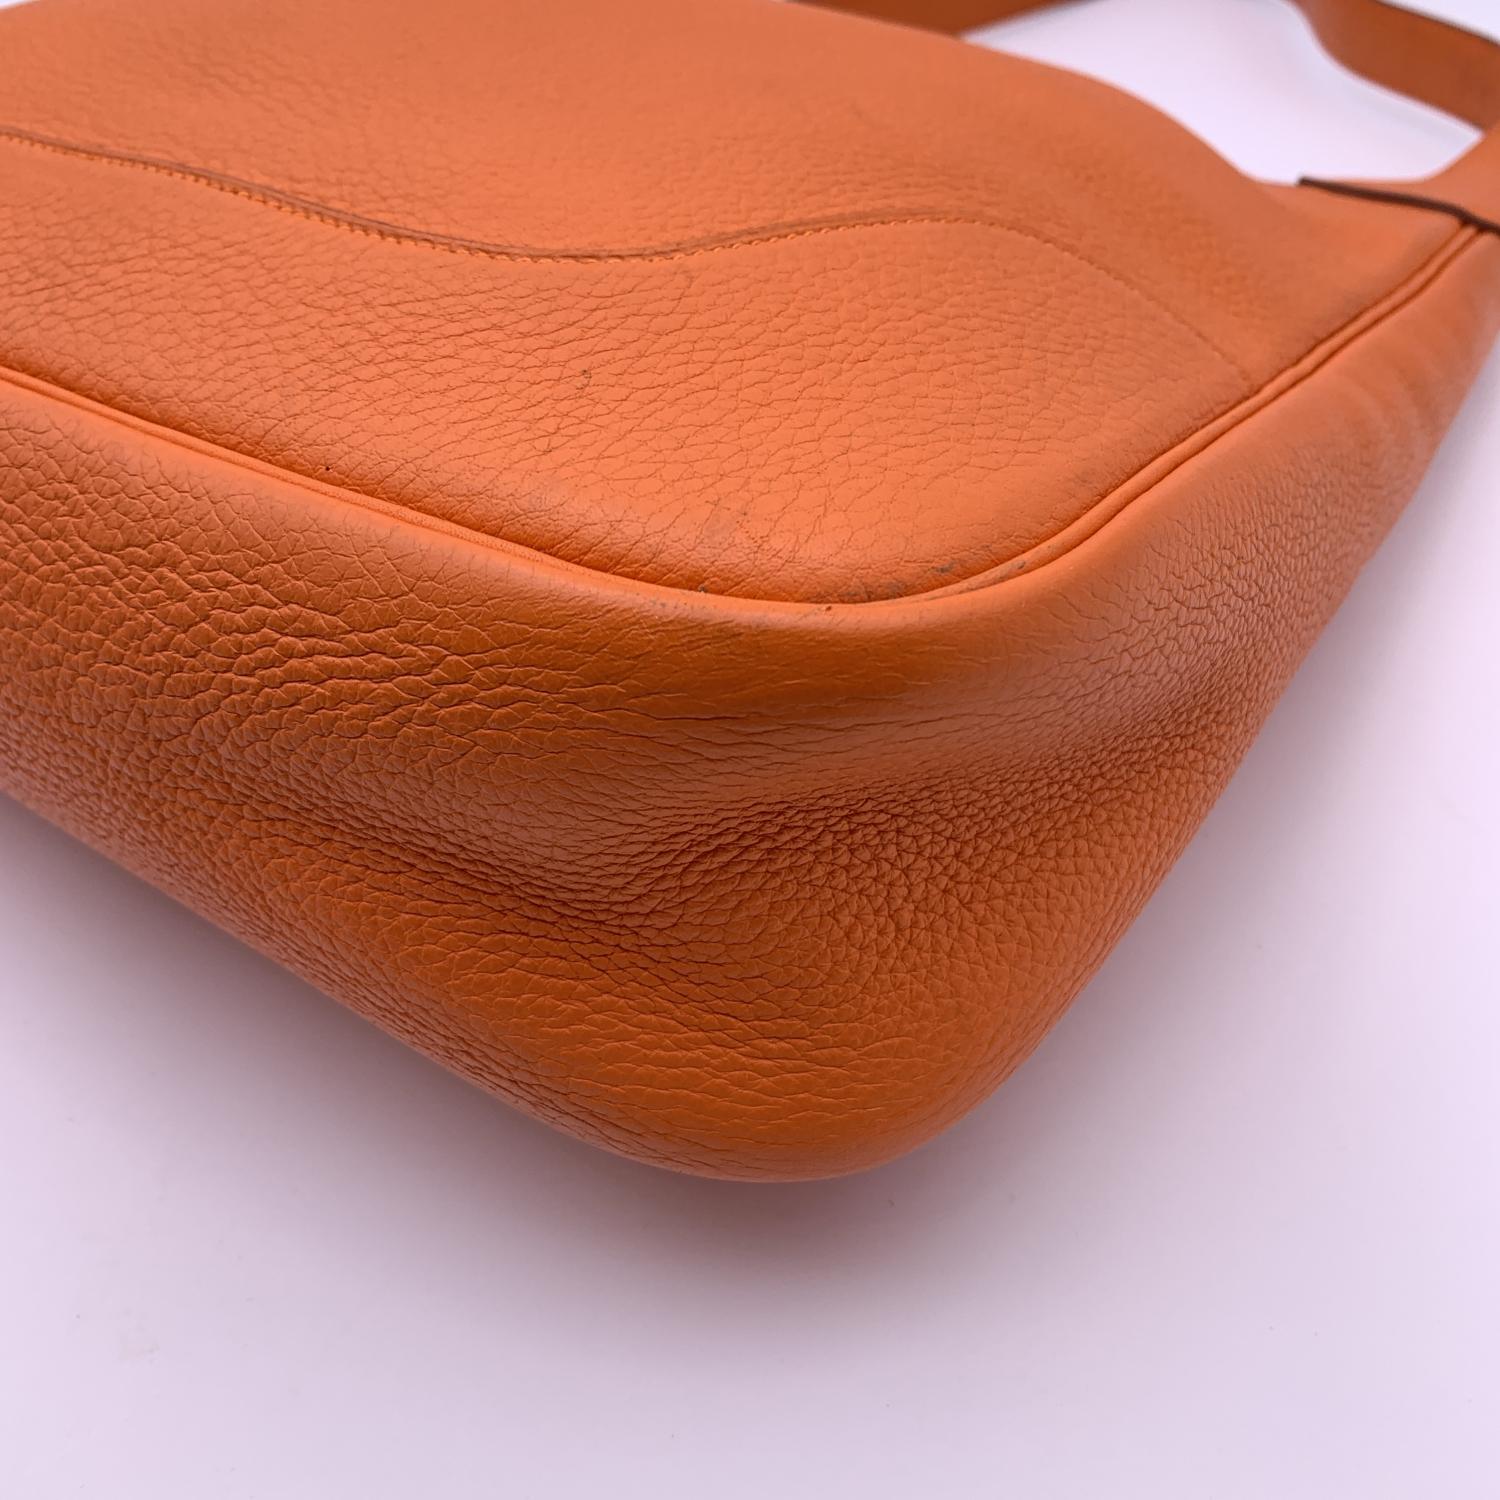 Hermes Orange Leather Sac Trim II 35 Hobo Shoulder Bag 6